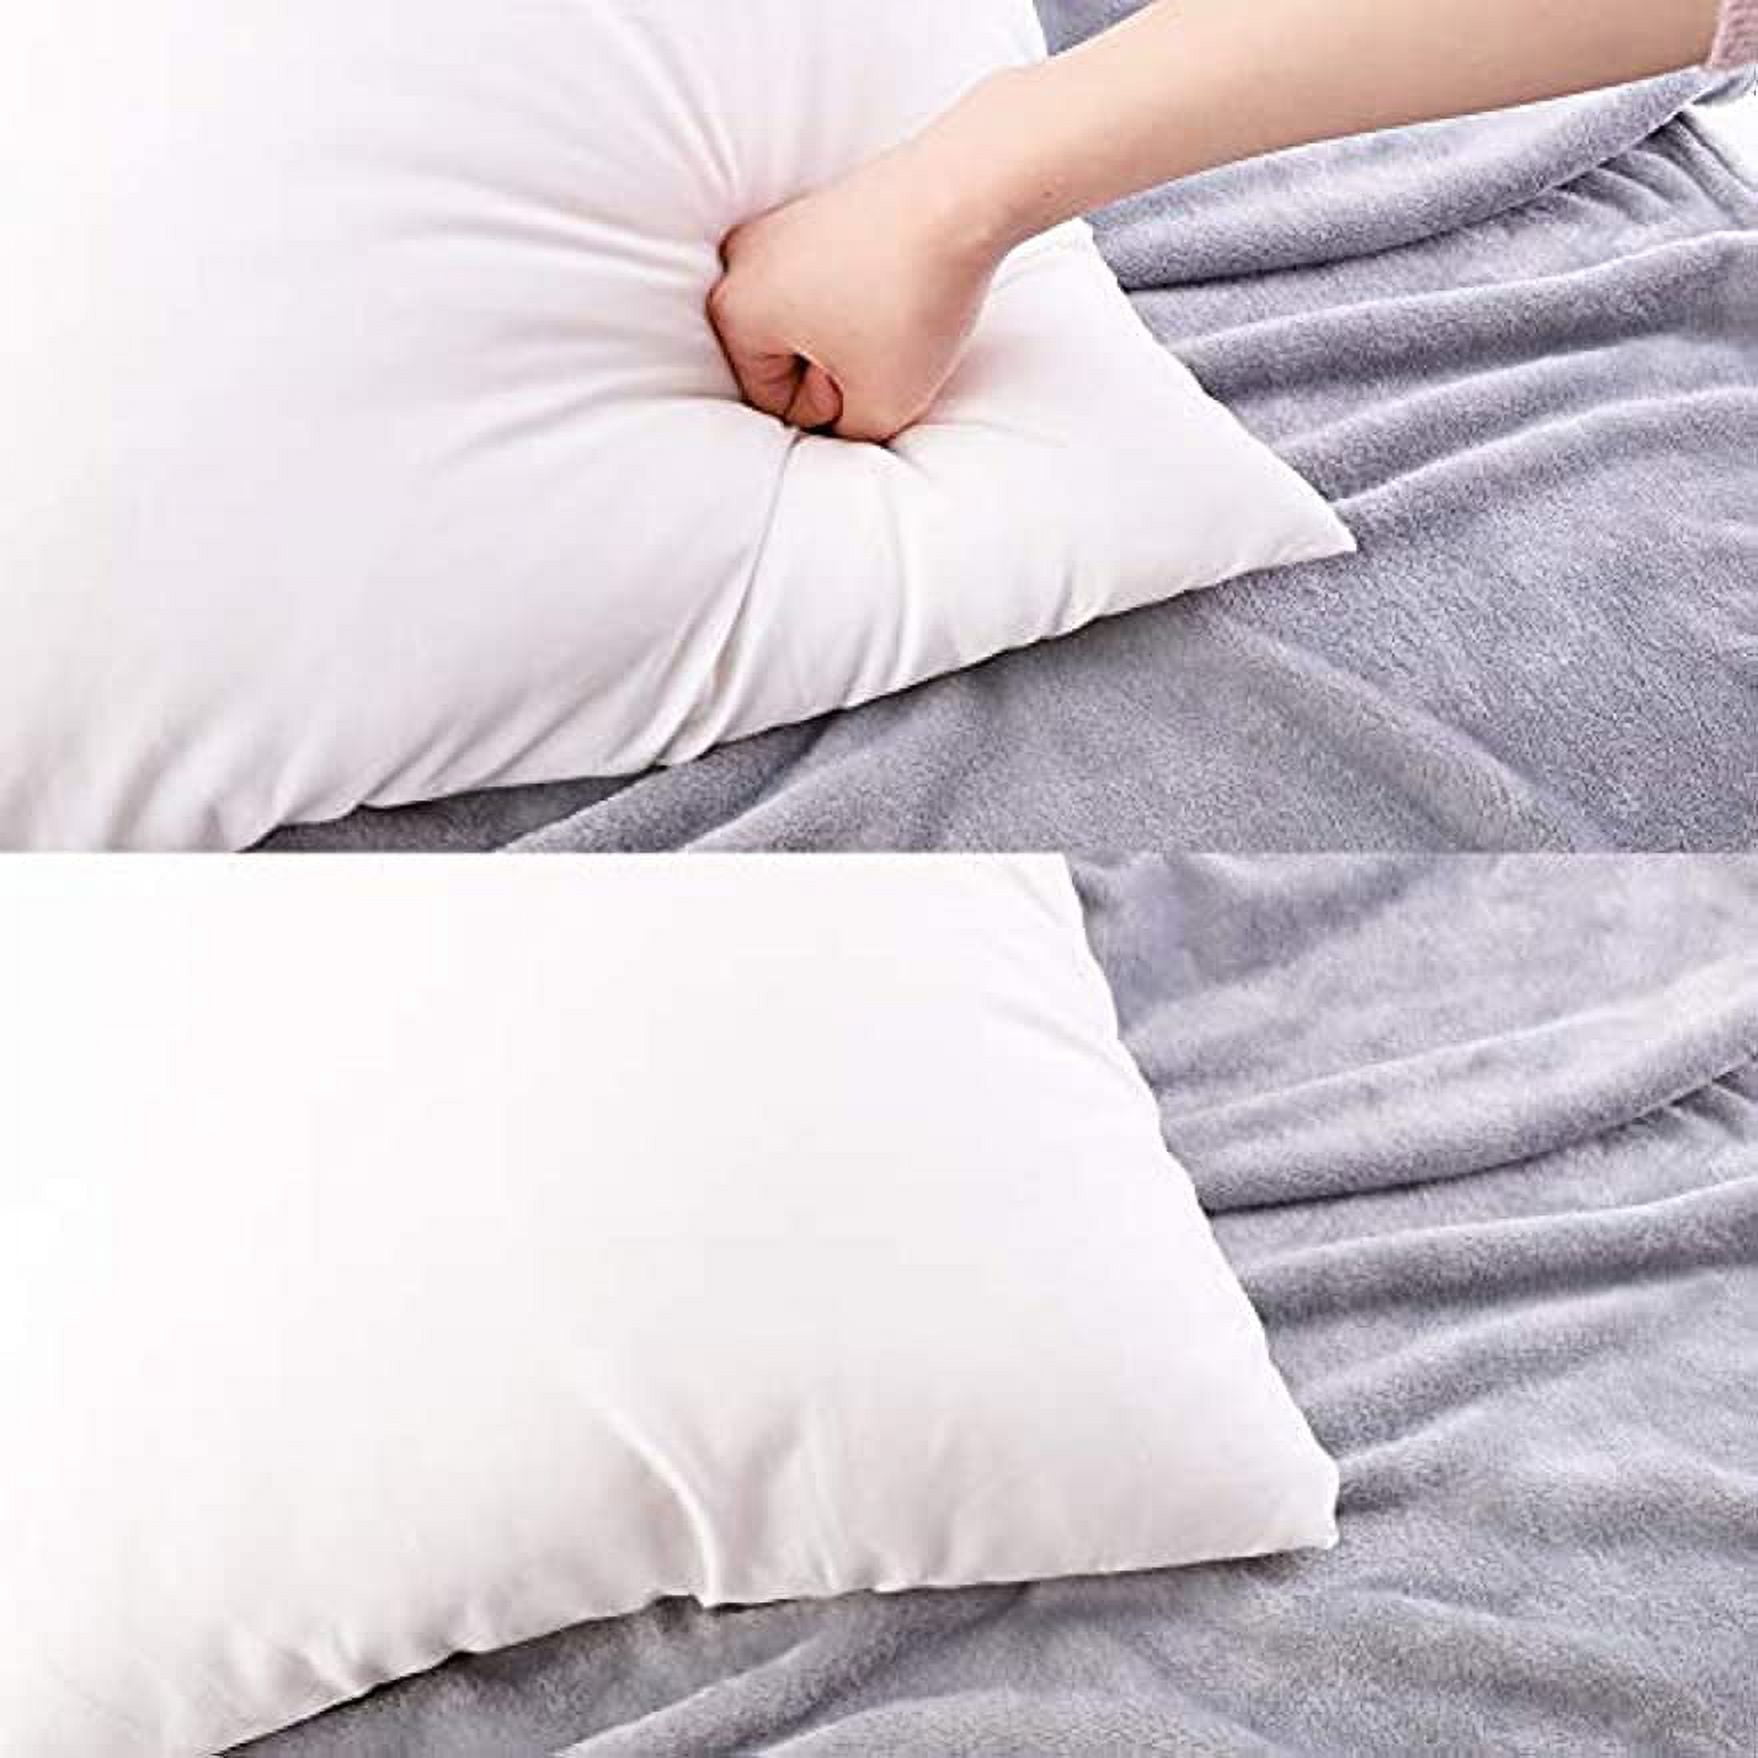 Pillow Insert with Box Edge - 18 x 18, Hobby Lobby